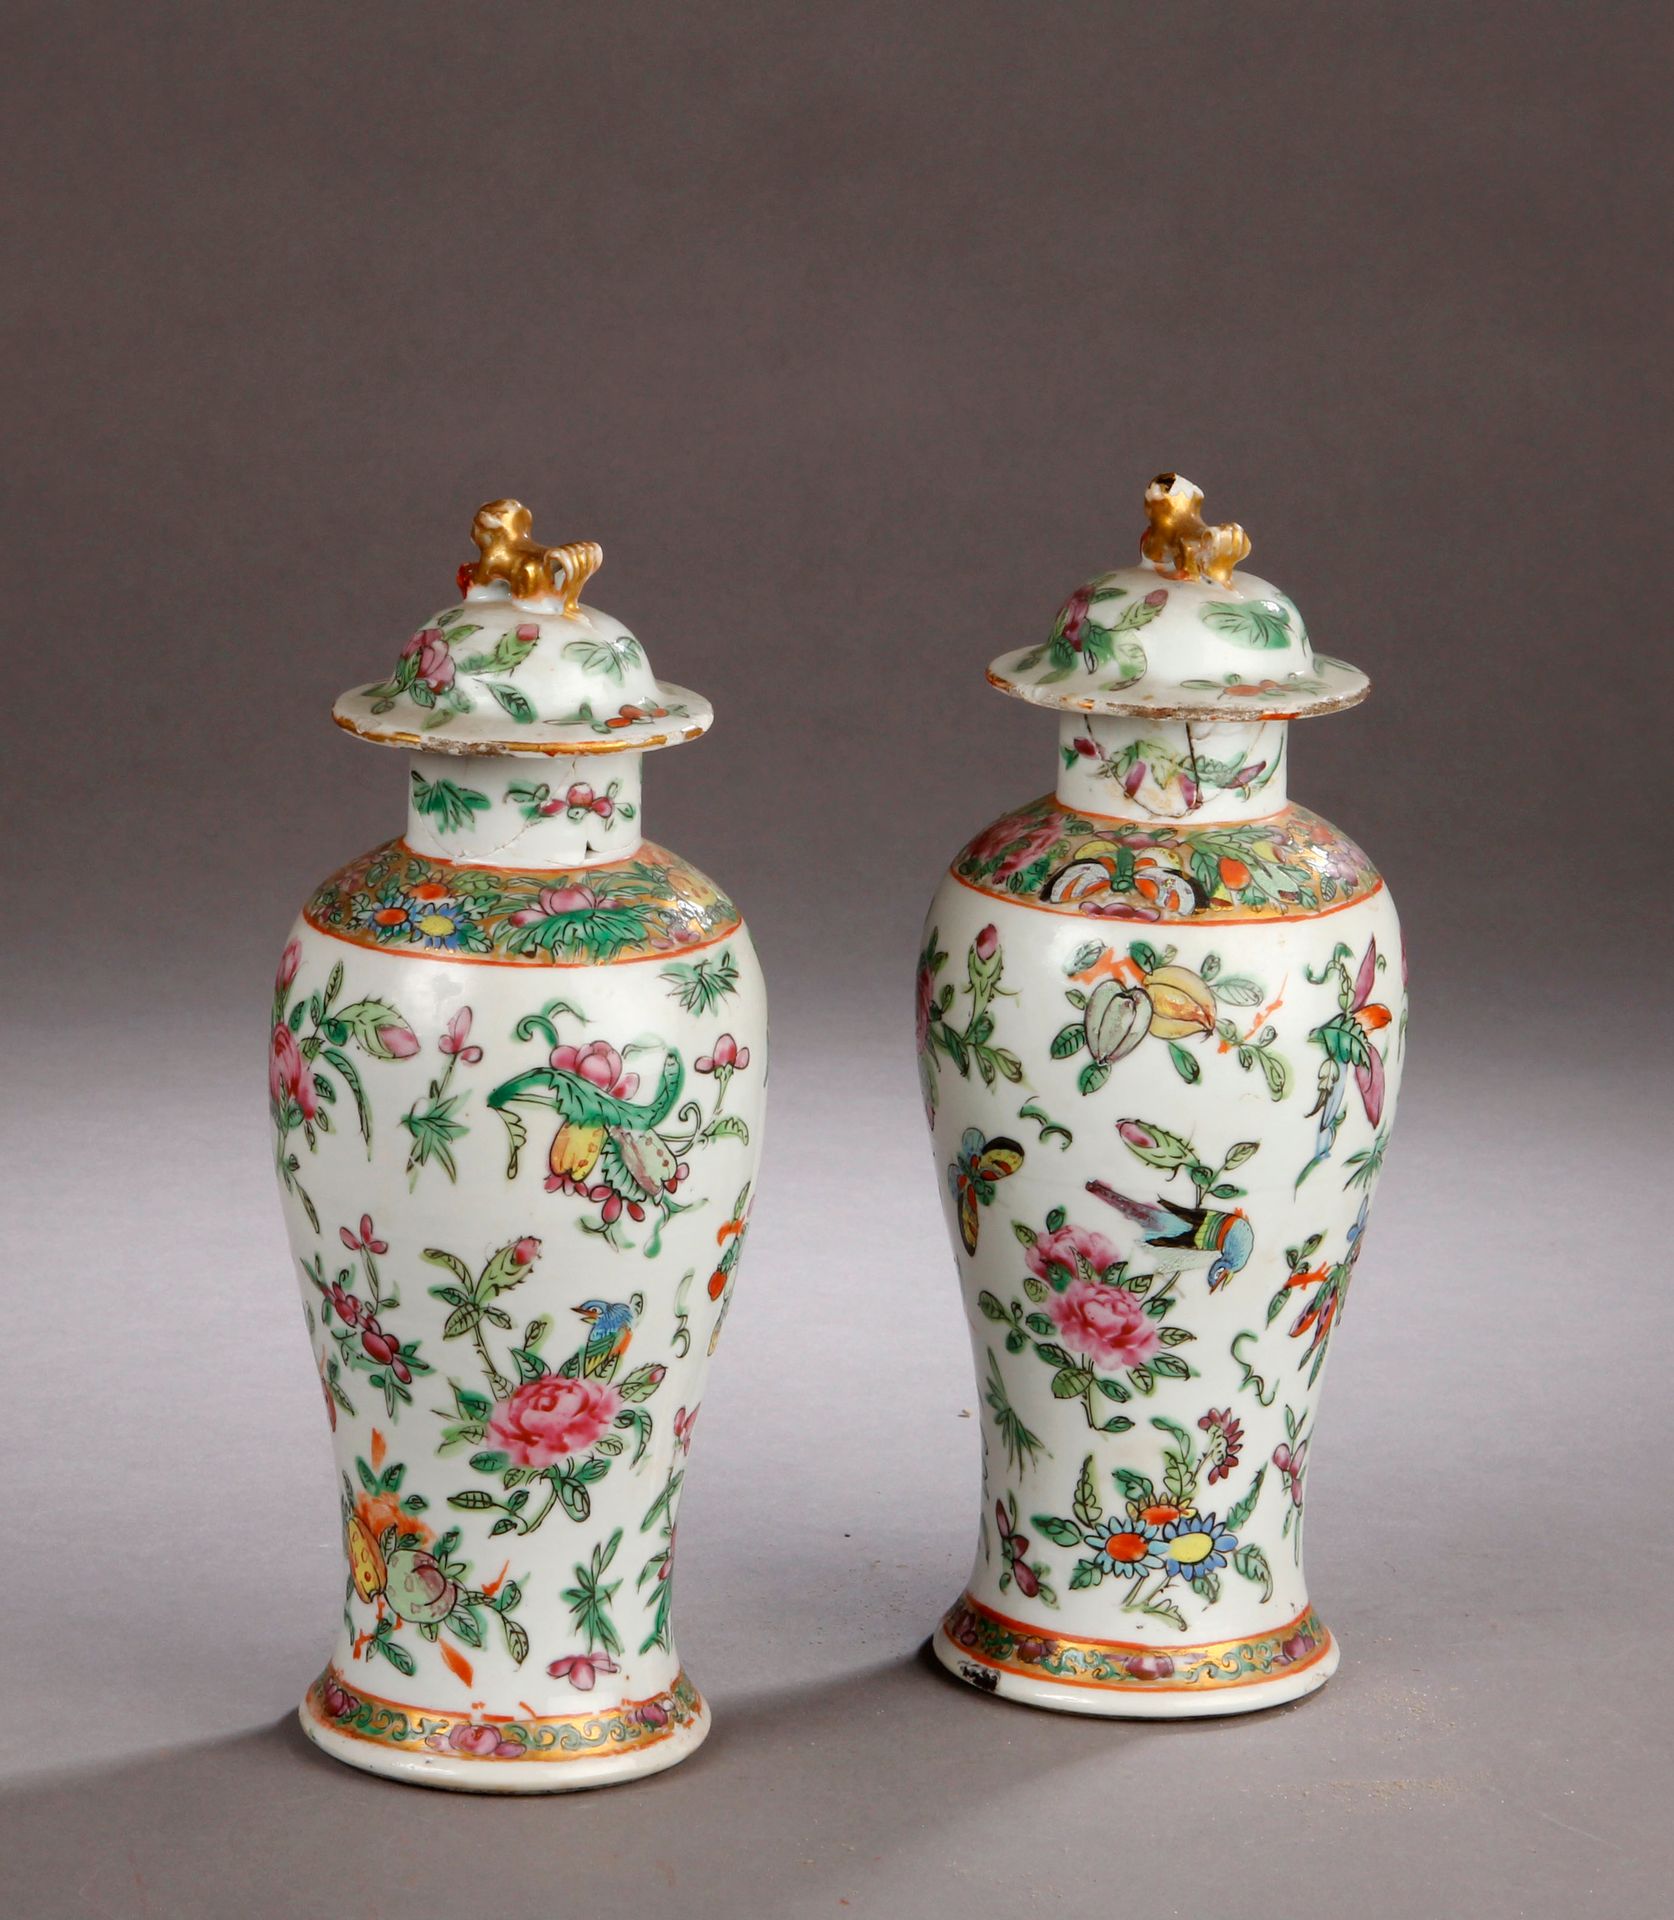 Null 一对瓷器覆盖的阳台花瓶，上面有珐琅彩的花枝装饰（损坏和拼贴）。
中国，20世纪初。
H.24厘米